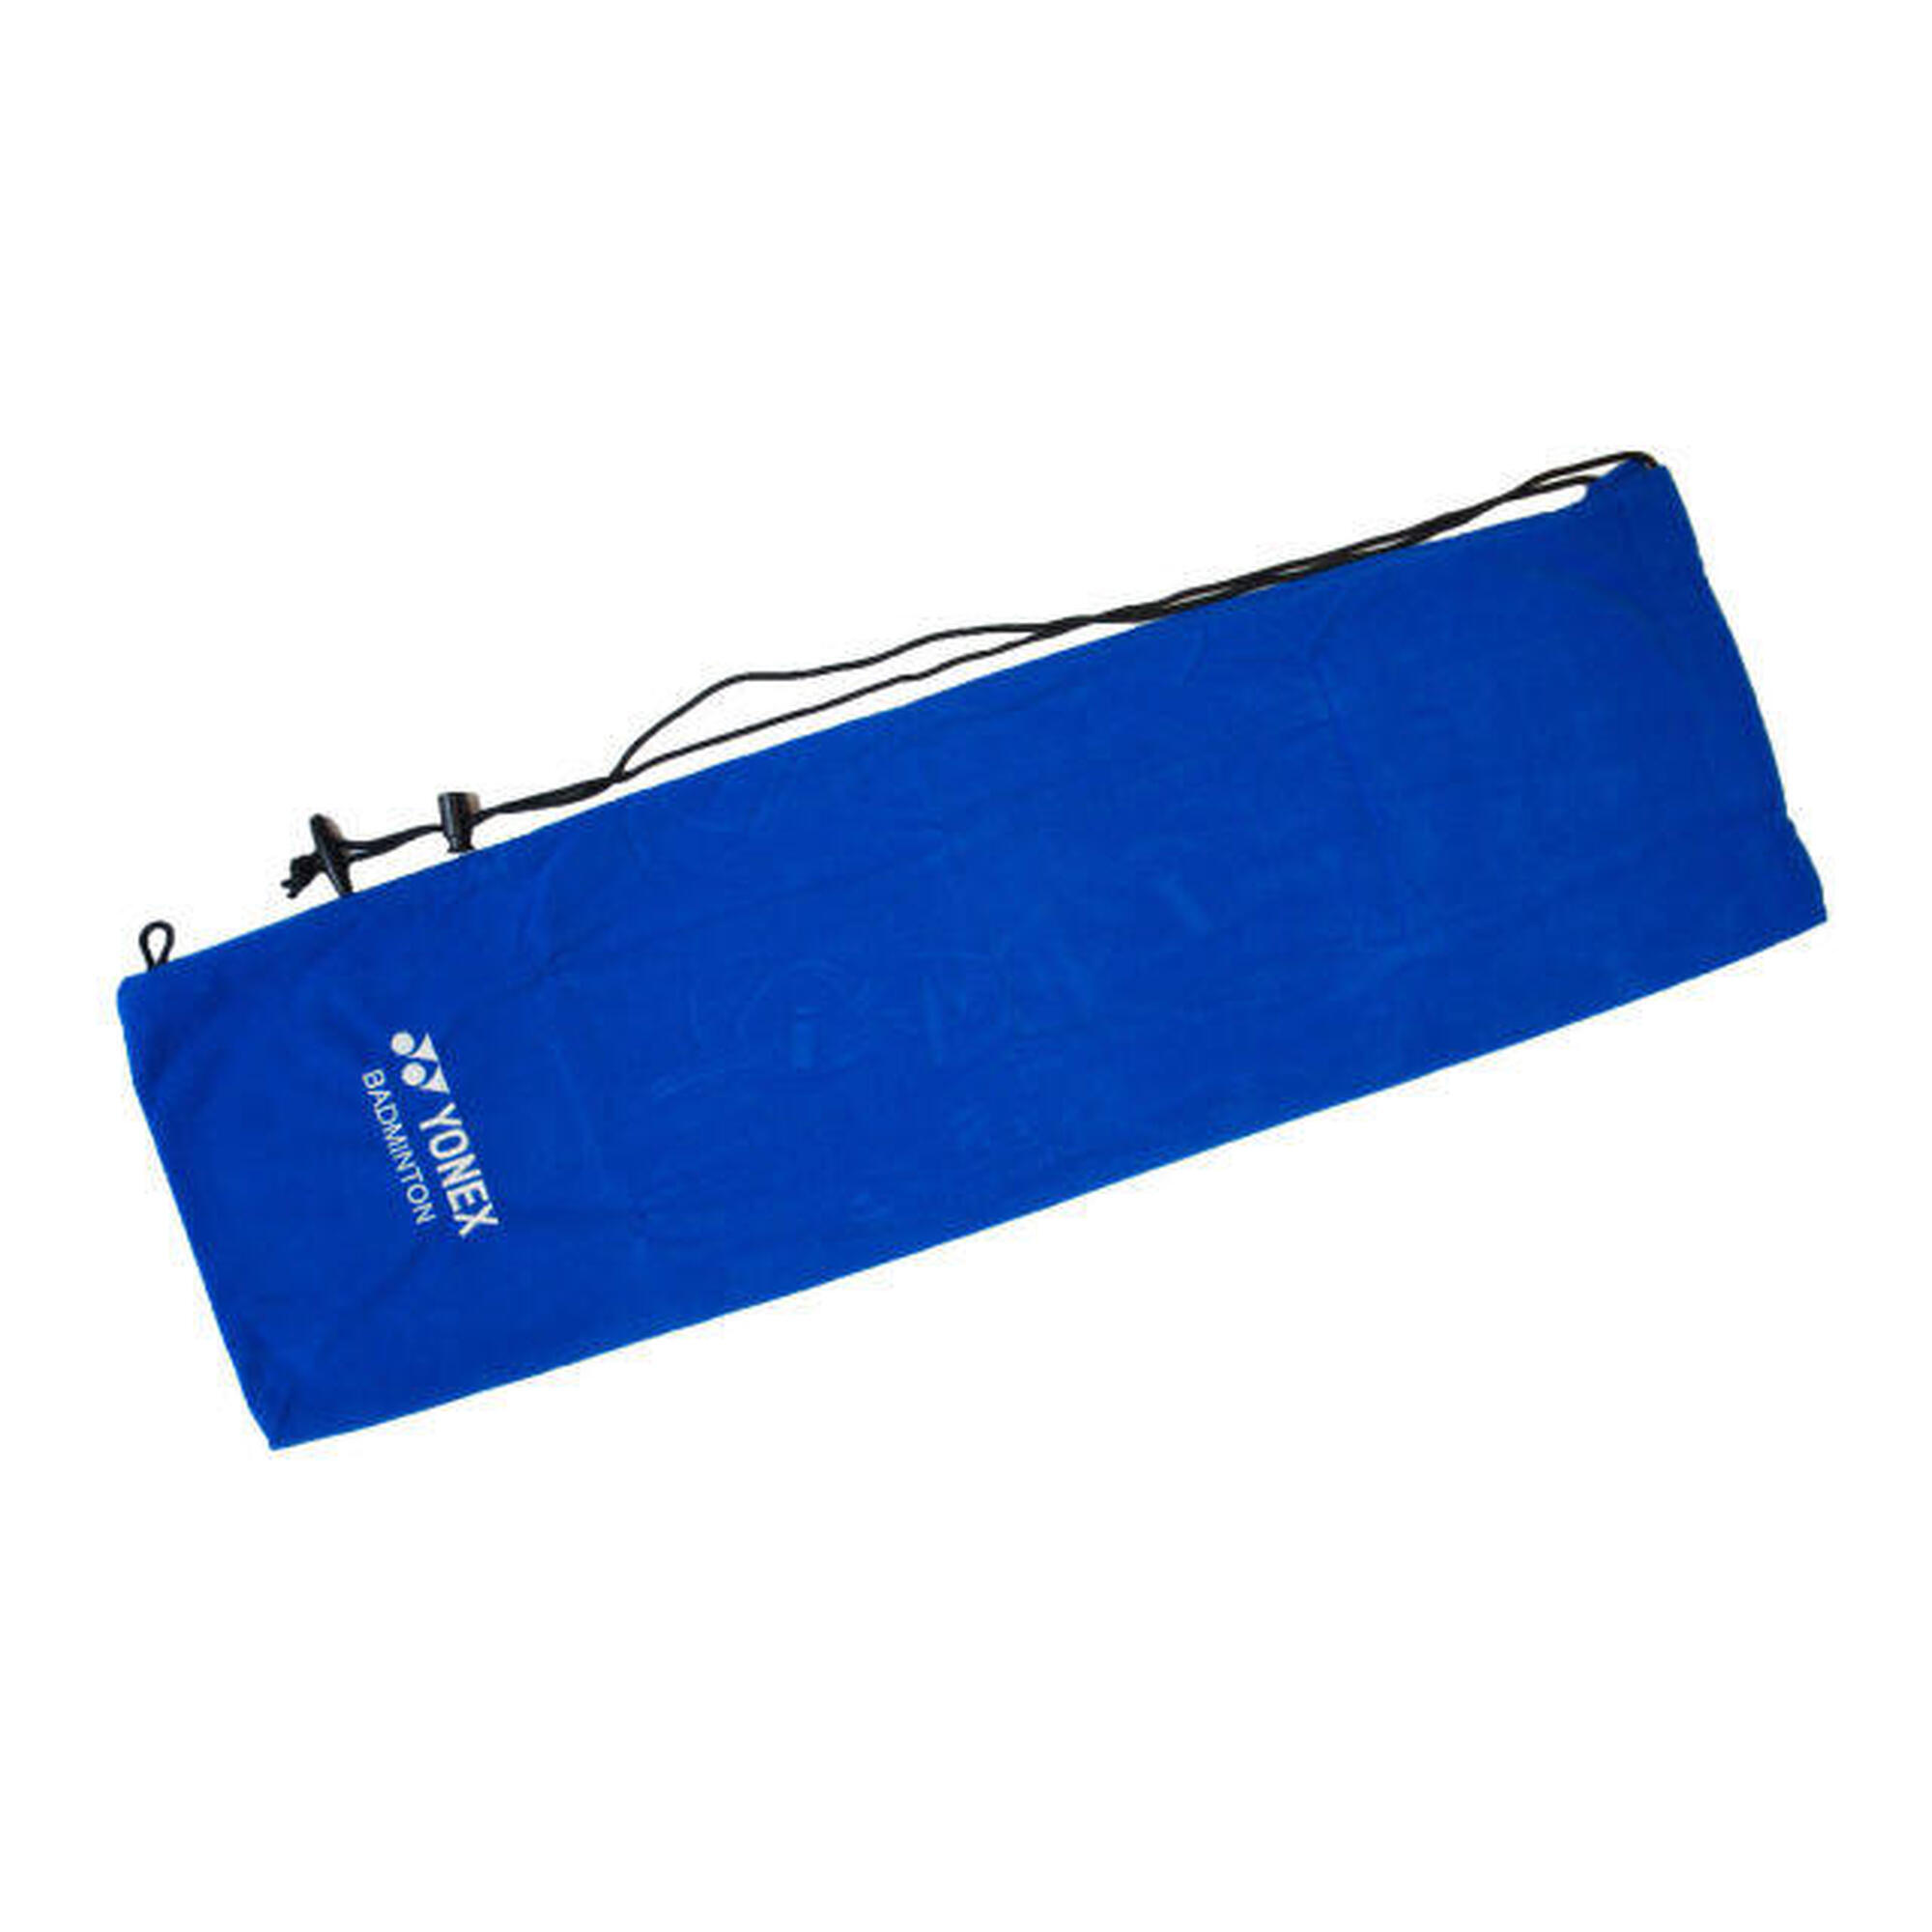 AC541 索繩羽毛球袋 - 藍色